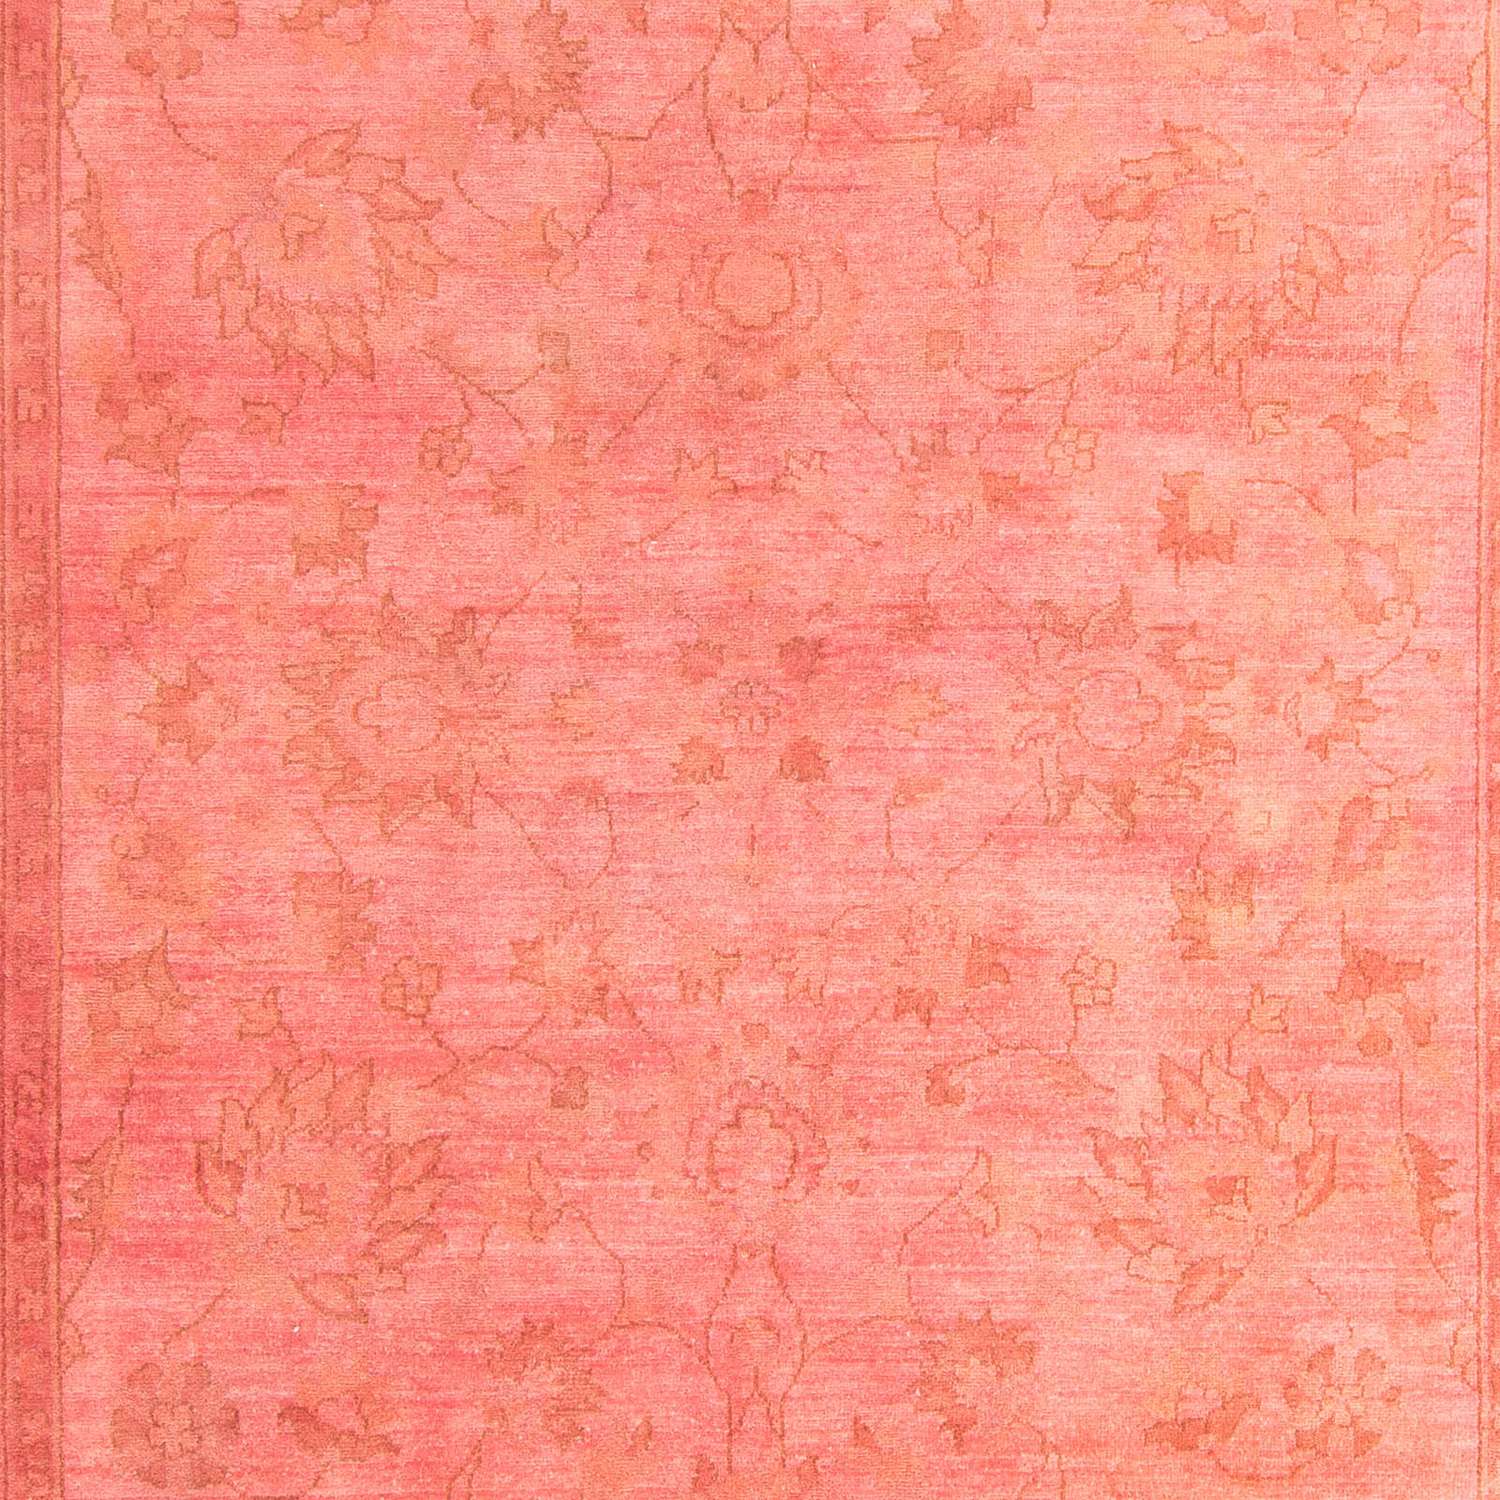 Ziegler Rug - 305 x 204 cm - rose